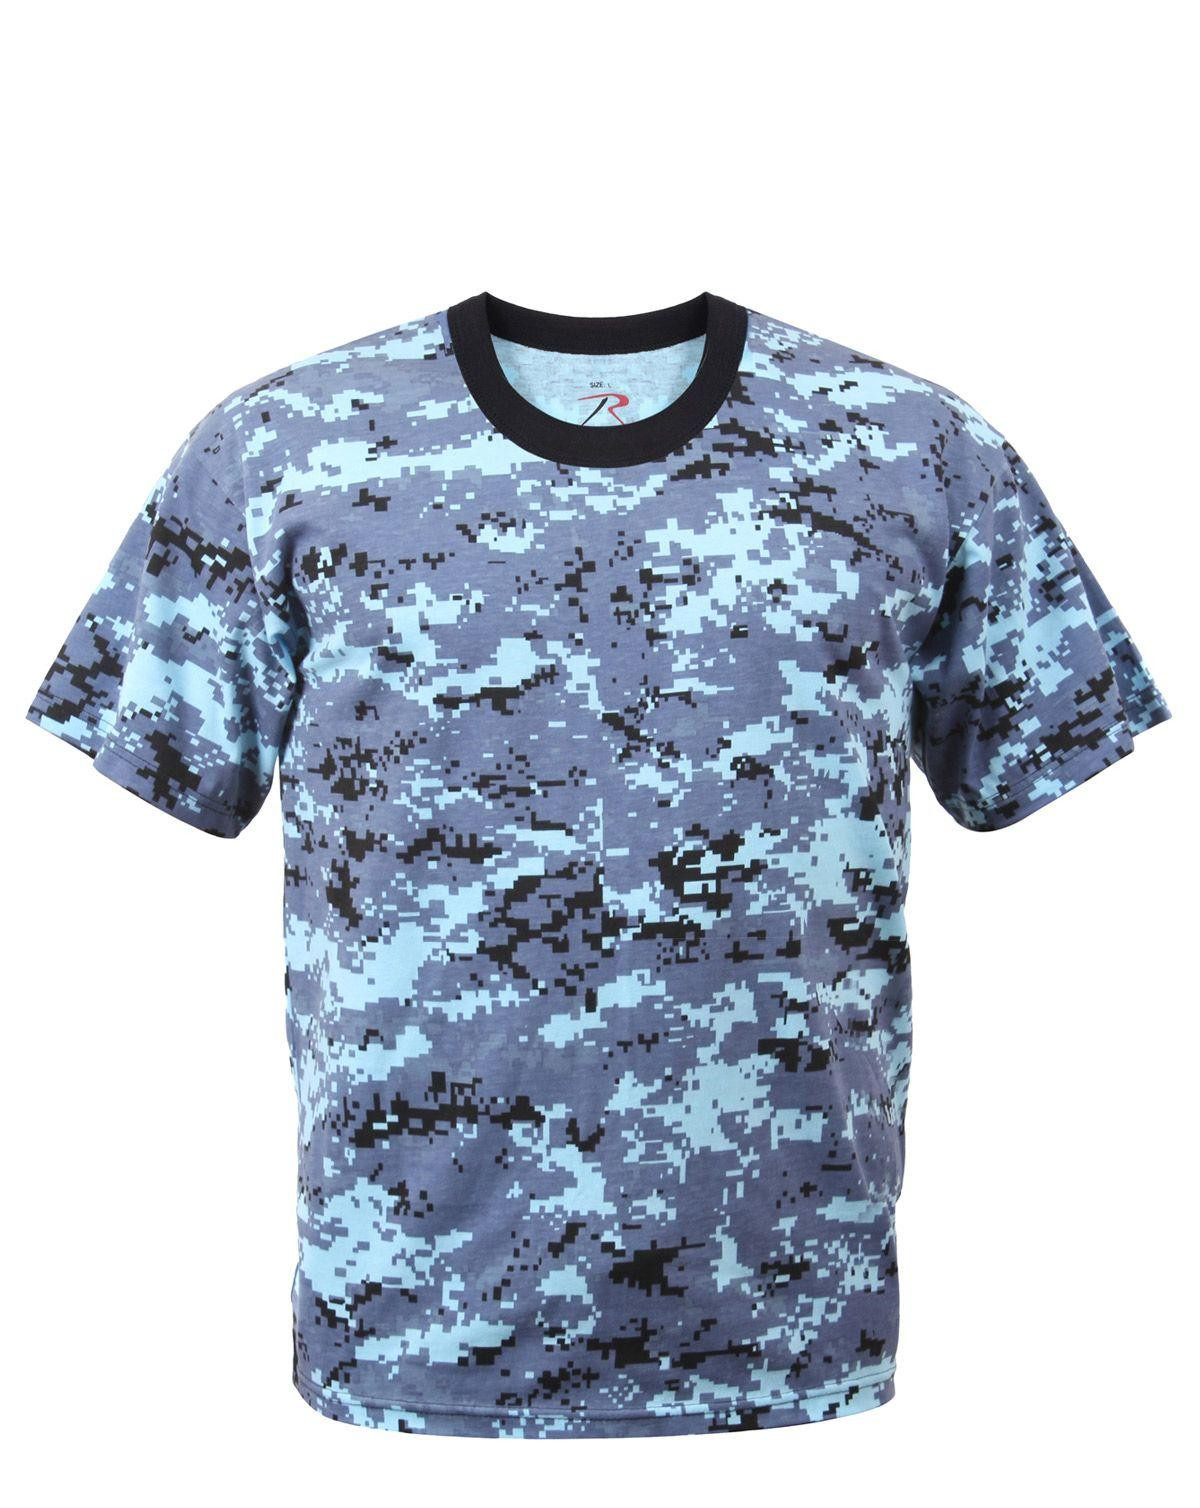 Rothco T-shirt - Mange Camouflager (Sky Blue Digital Camo, S)